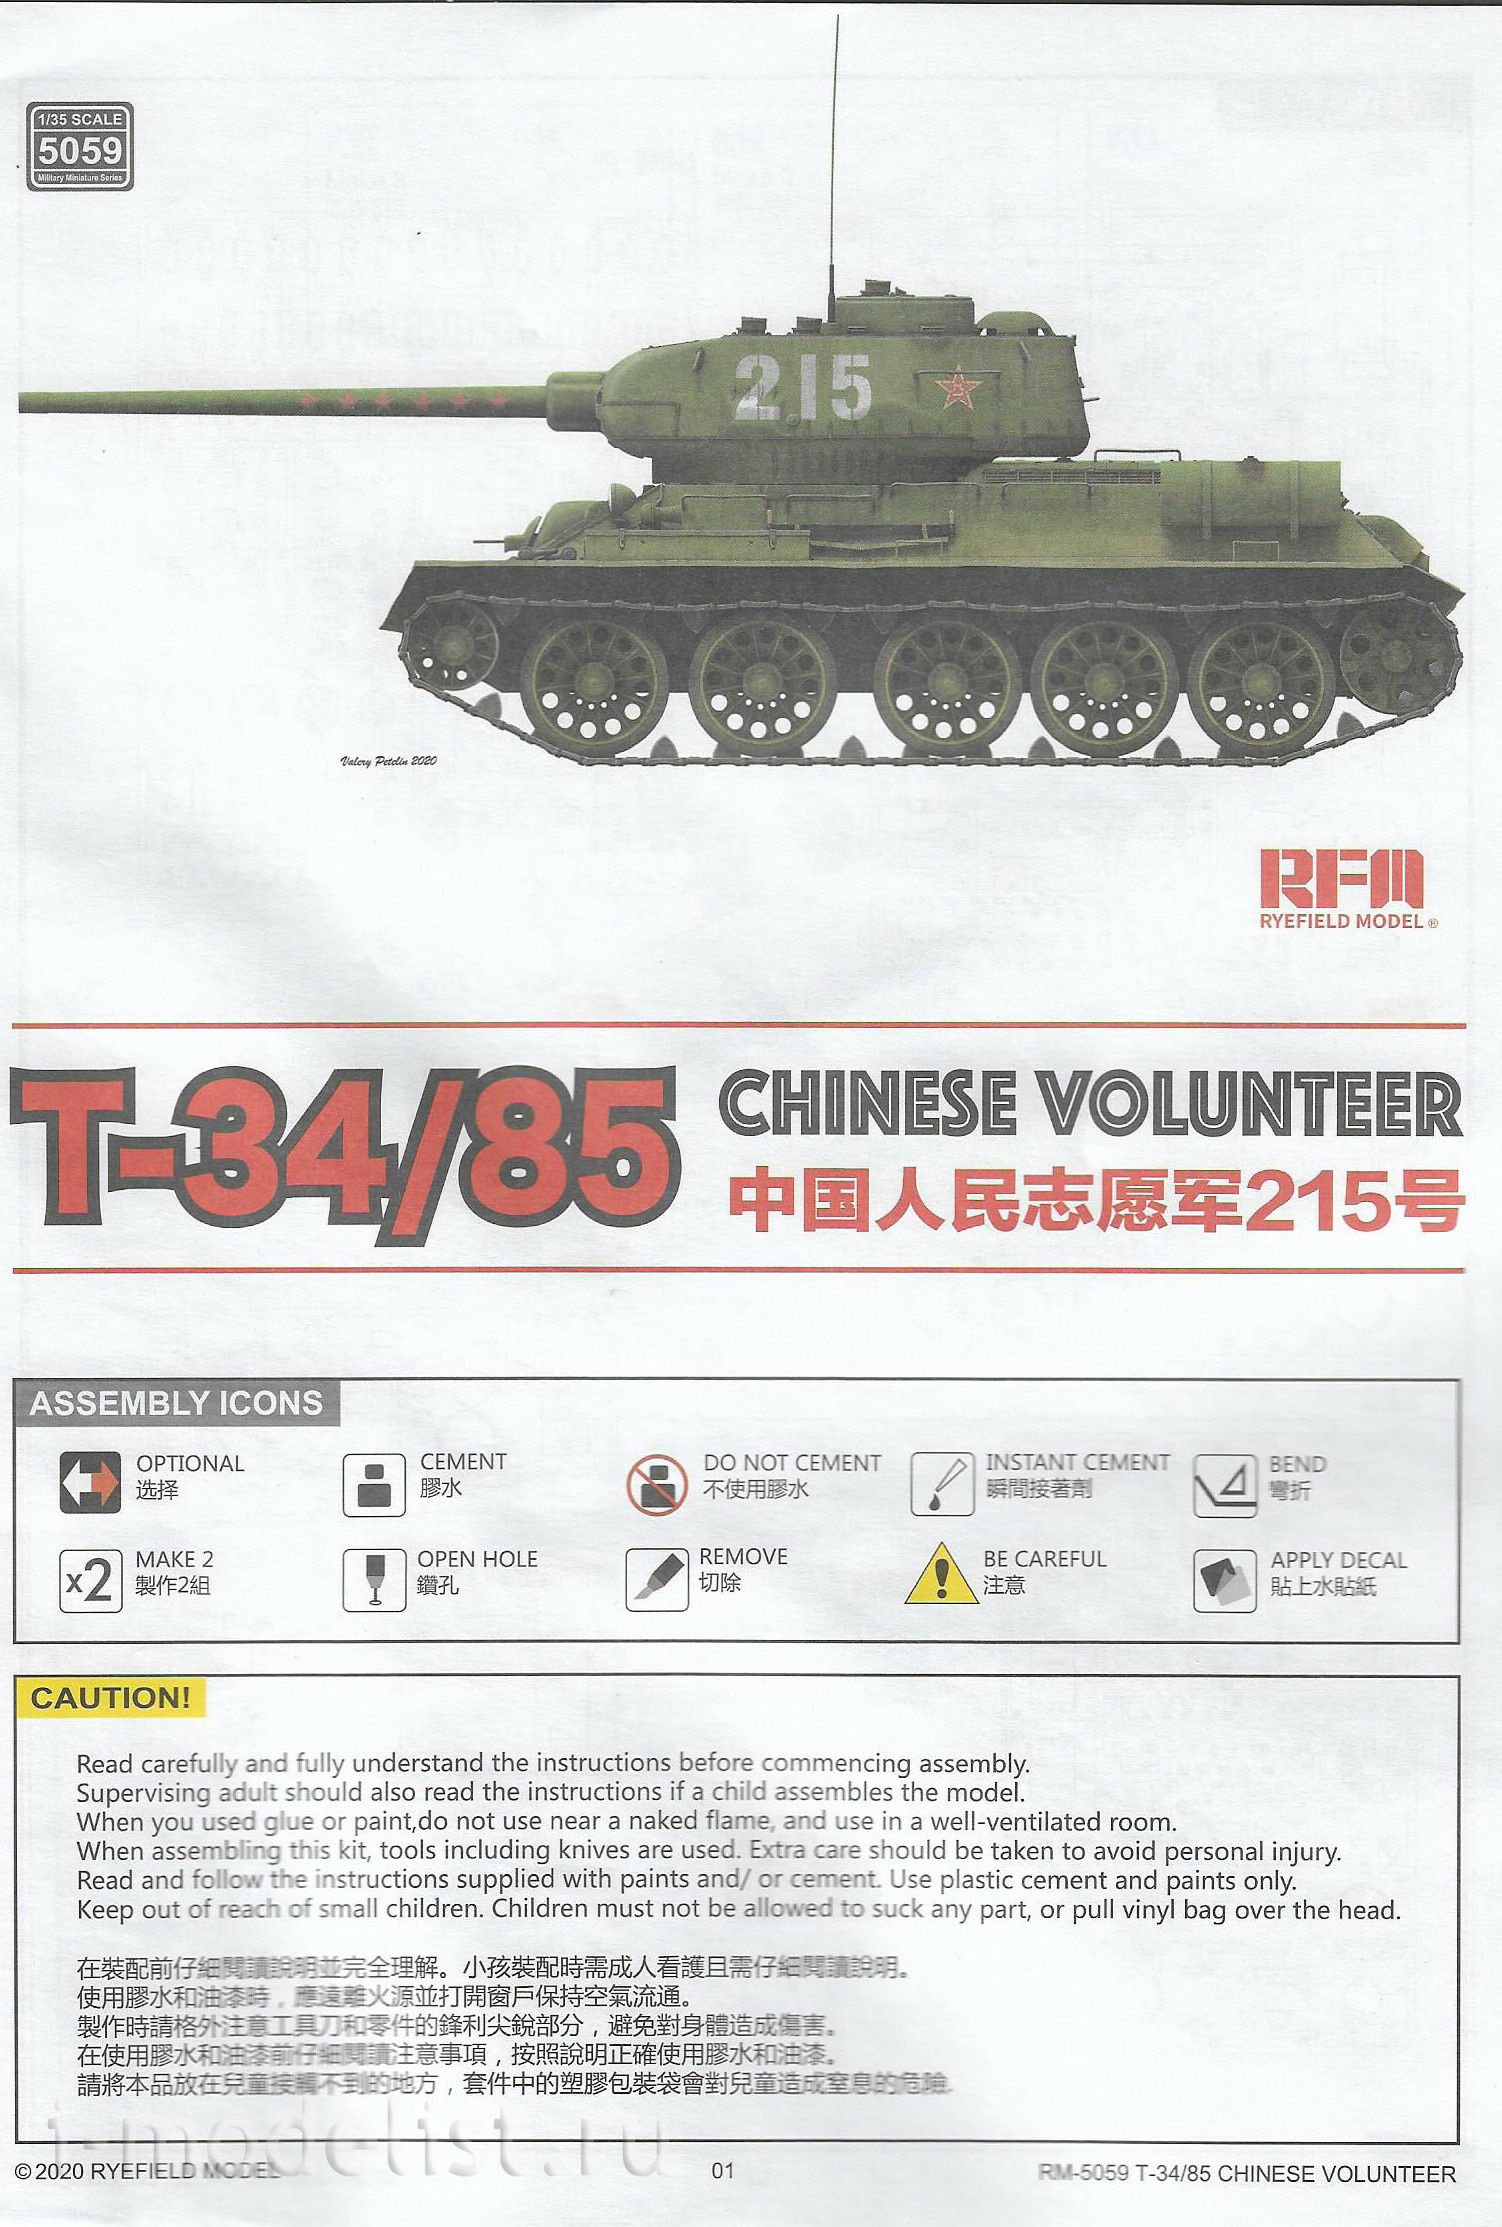 RM-5059 Rye Field Model Tank T-34/85 Chinese Volunteer 